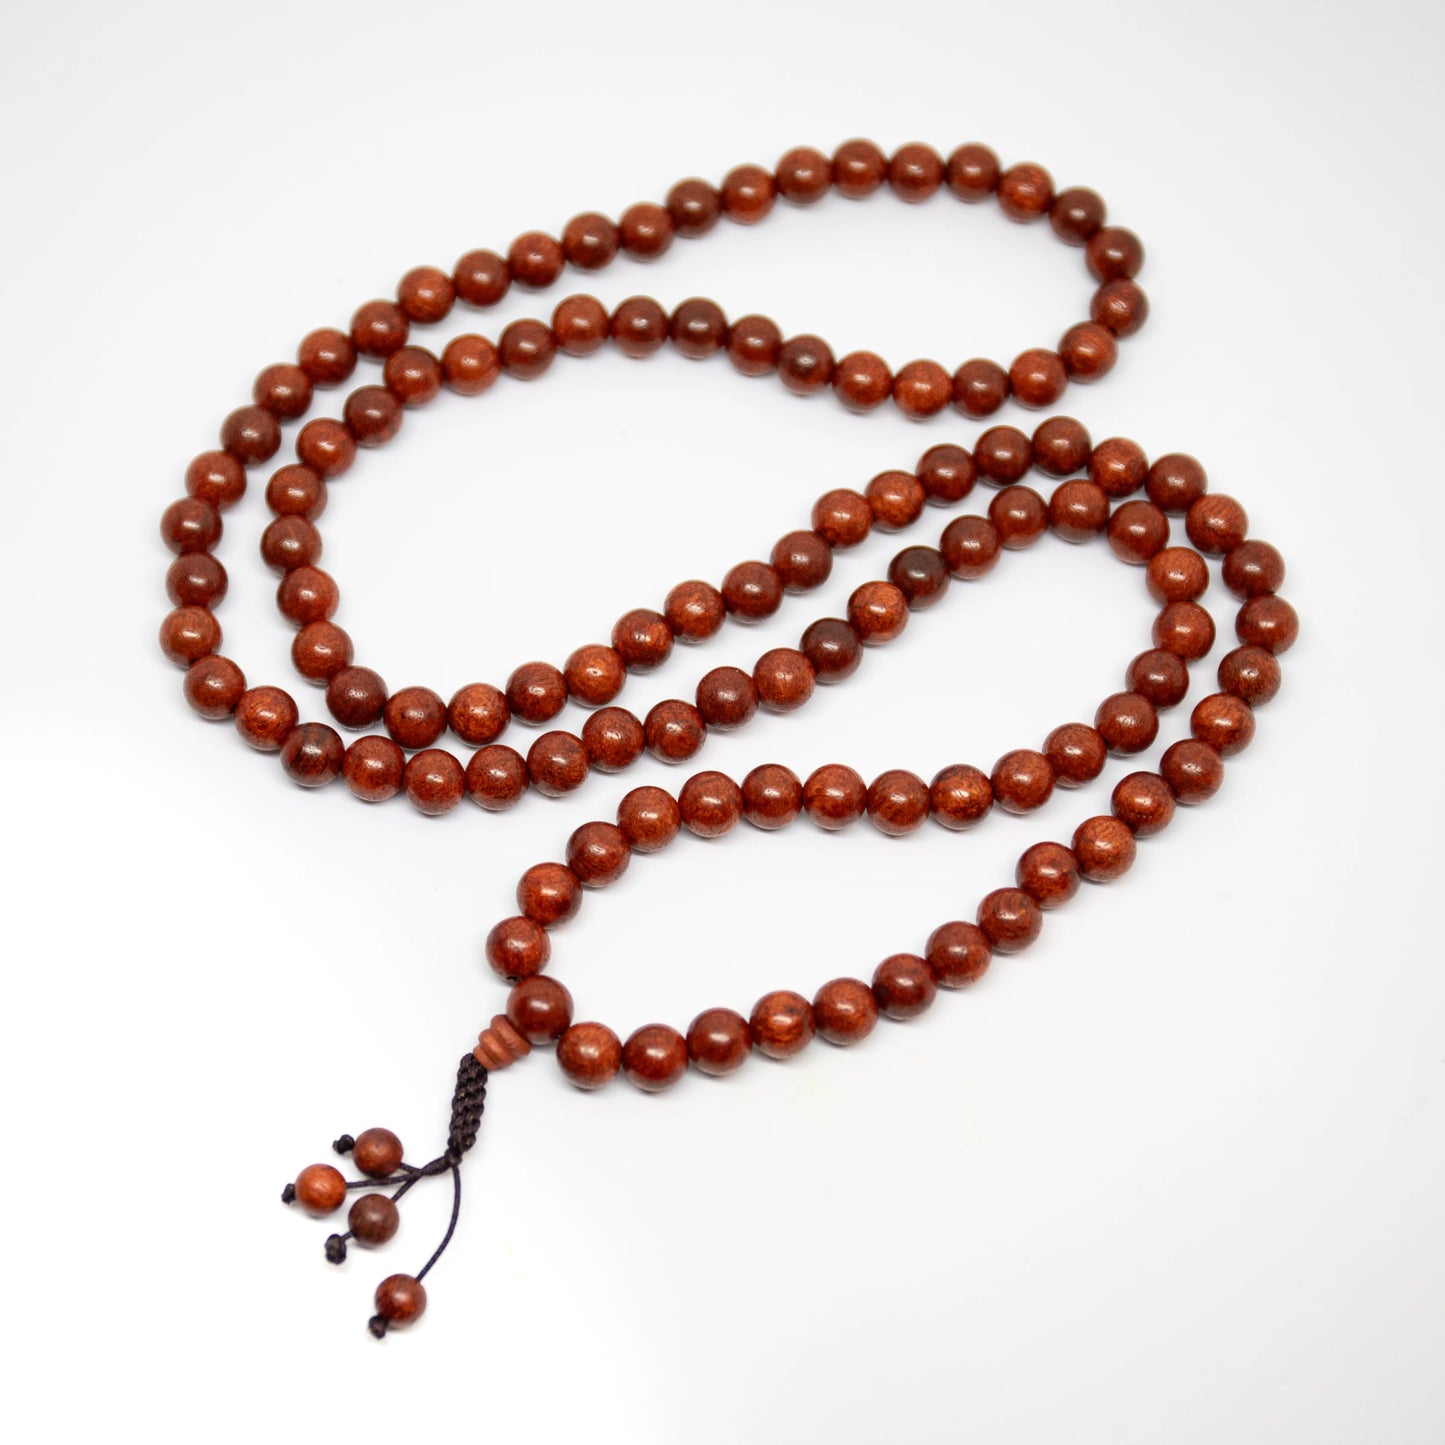 Dragon Blood Wood Zen 108 Bead Mala Prayer Beads - 8mm (1 Pack)